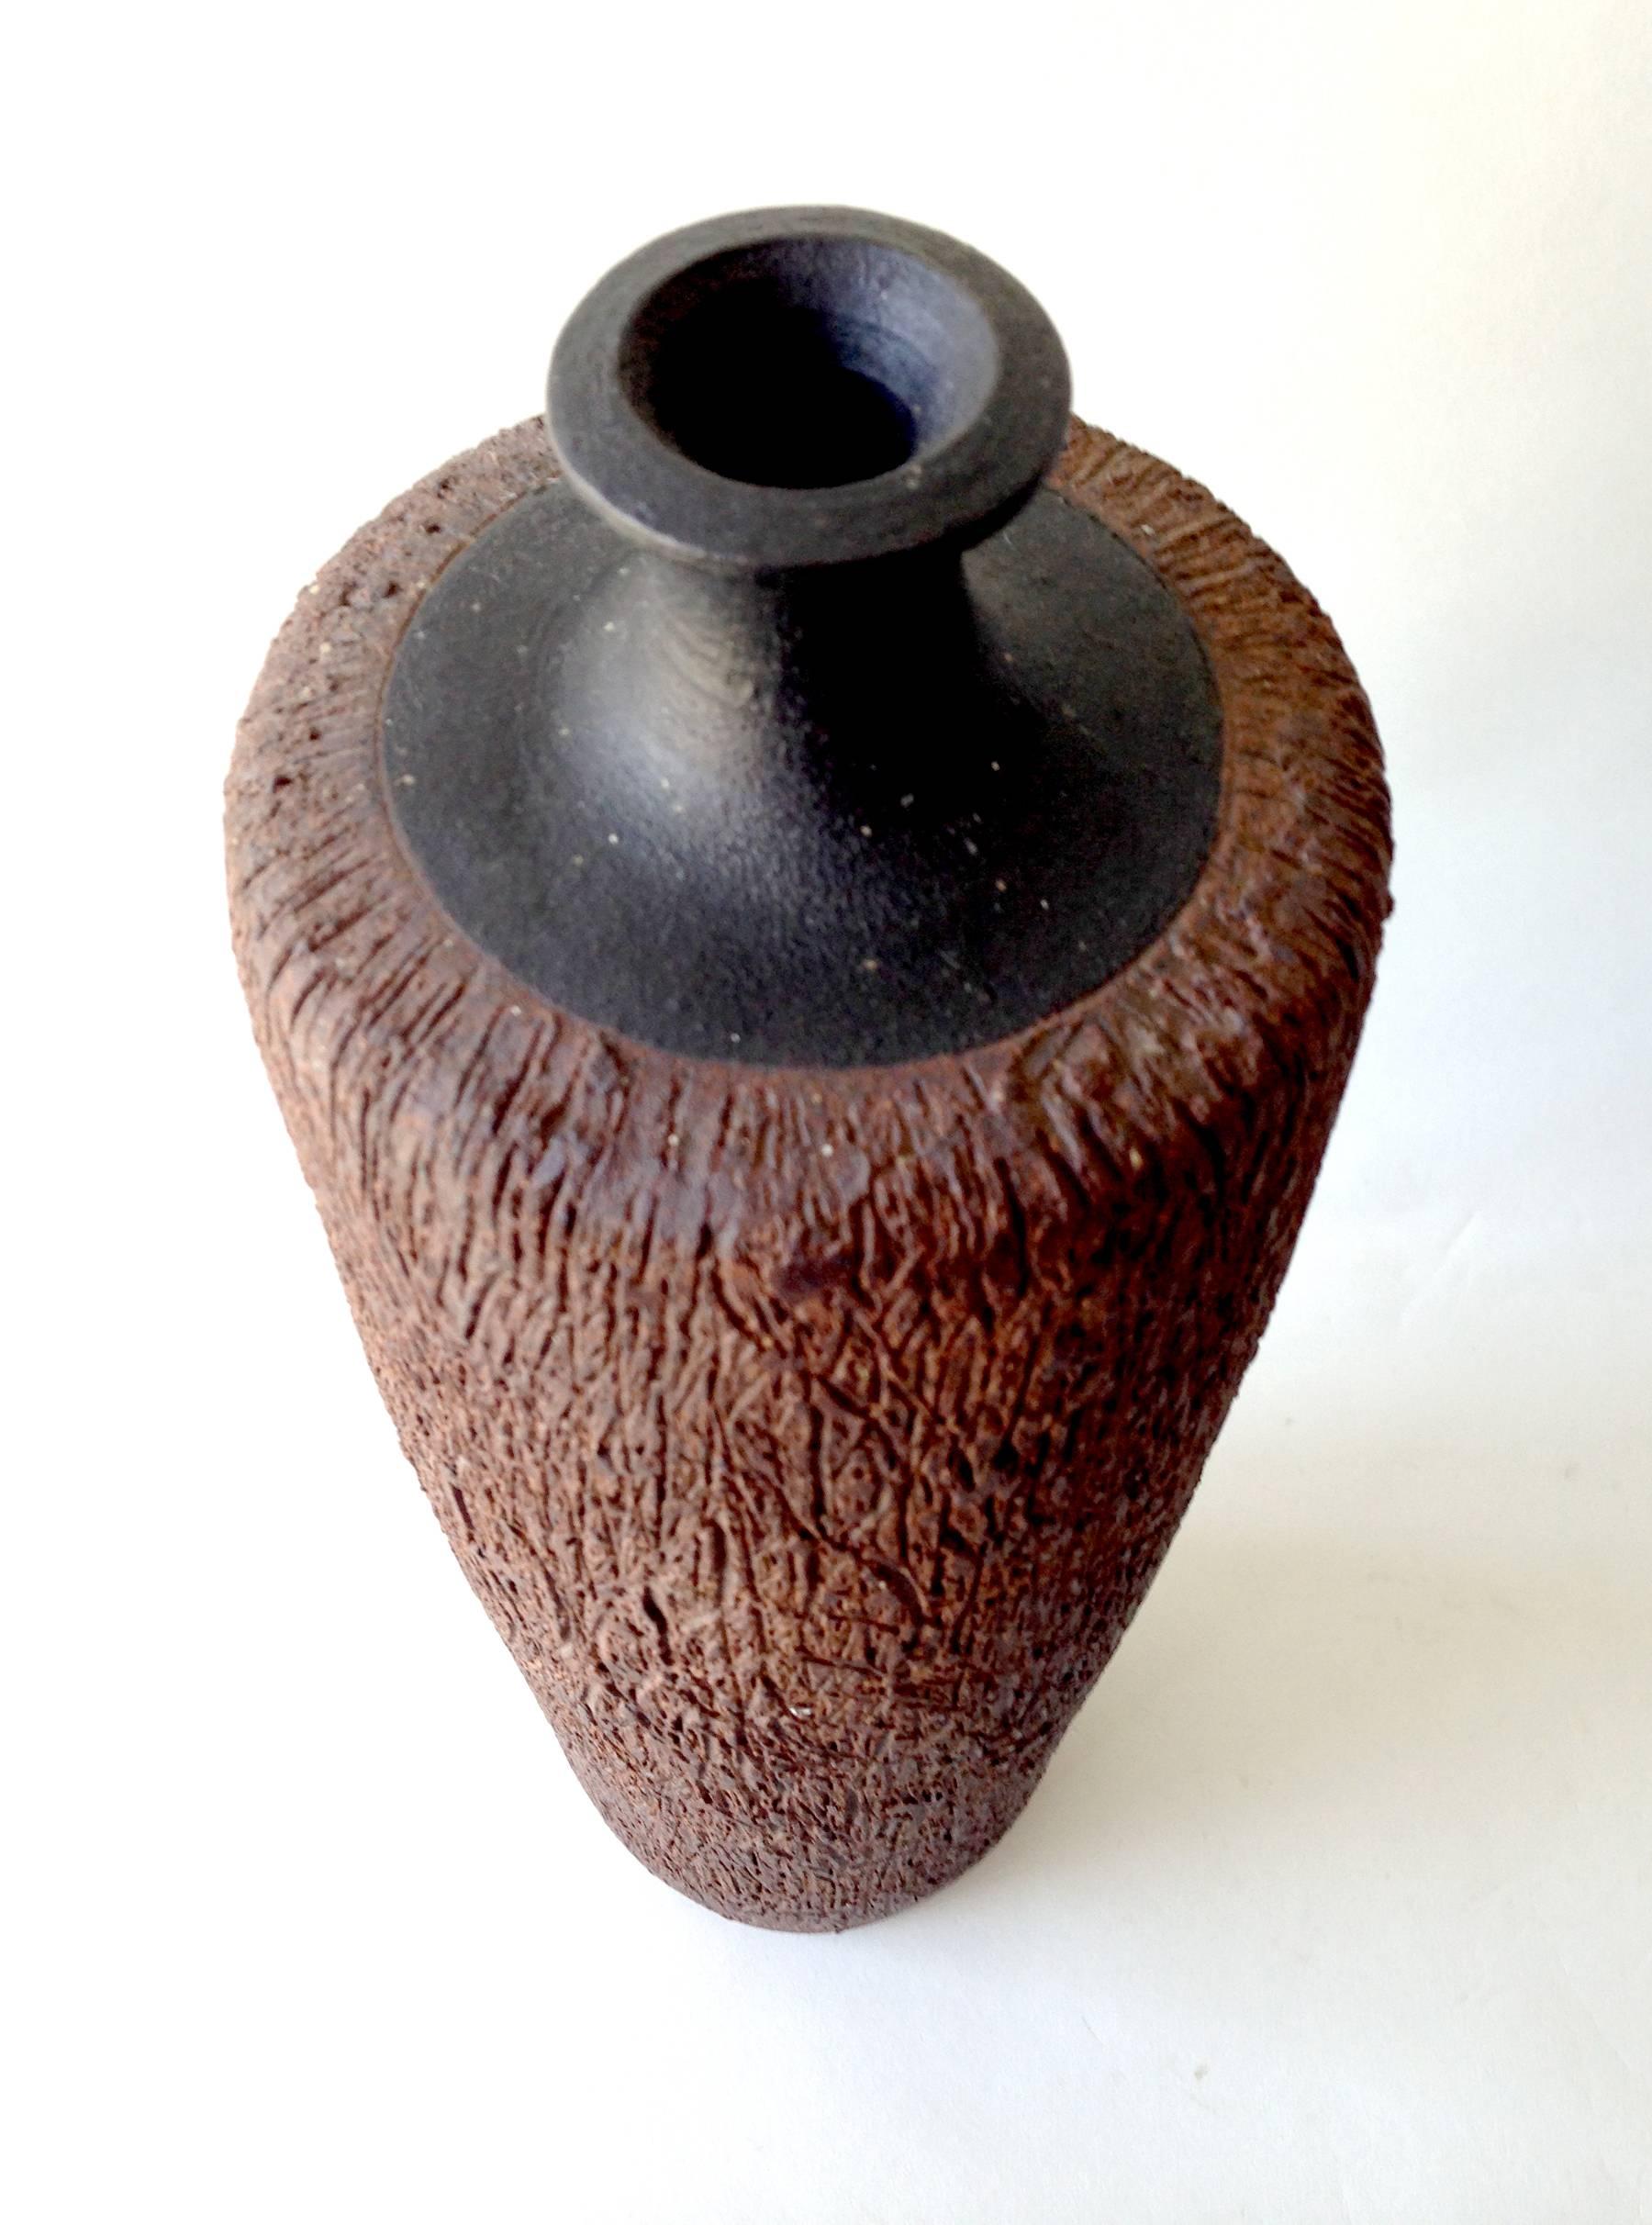 Dark stoneware bottleneck vase with sgrafitto texture, most likely California, circa 1960s. Piece measures 16.5